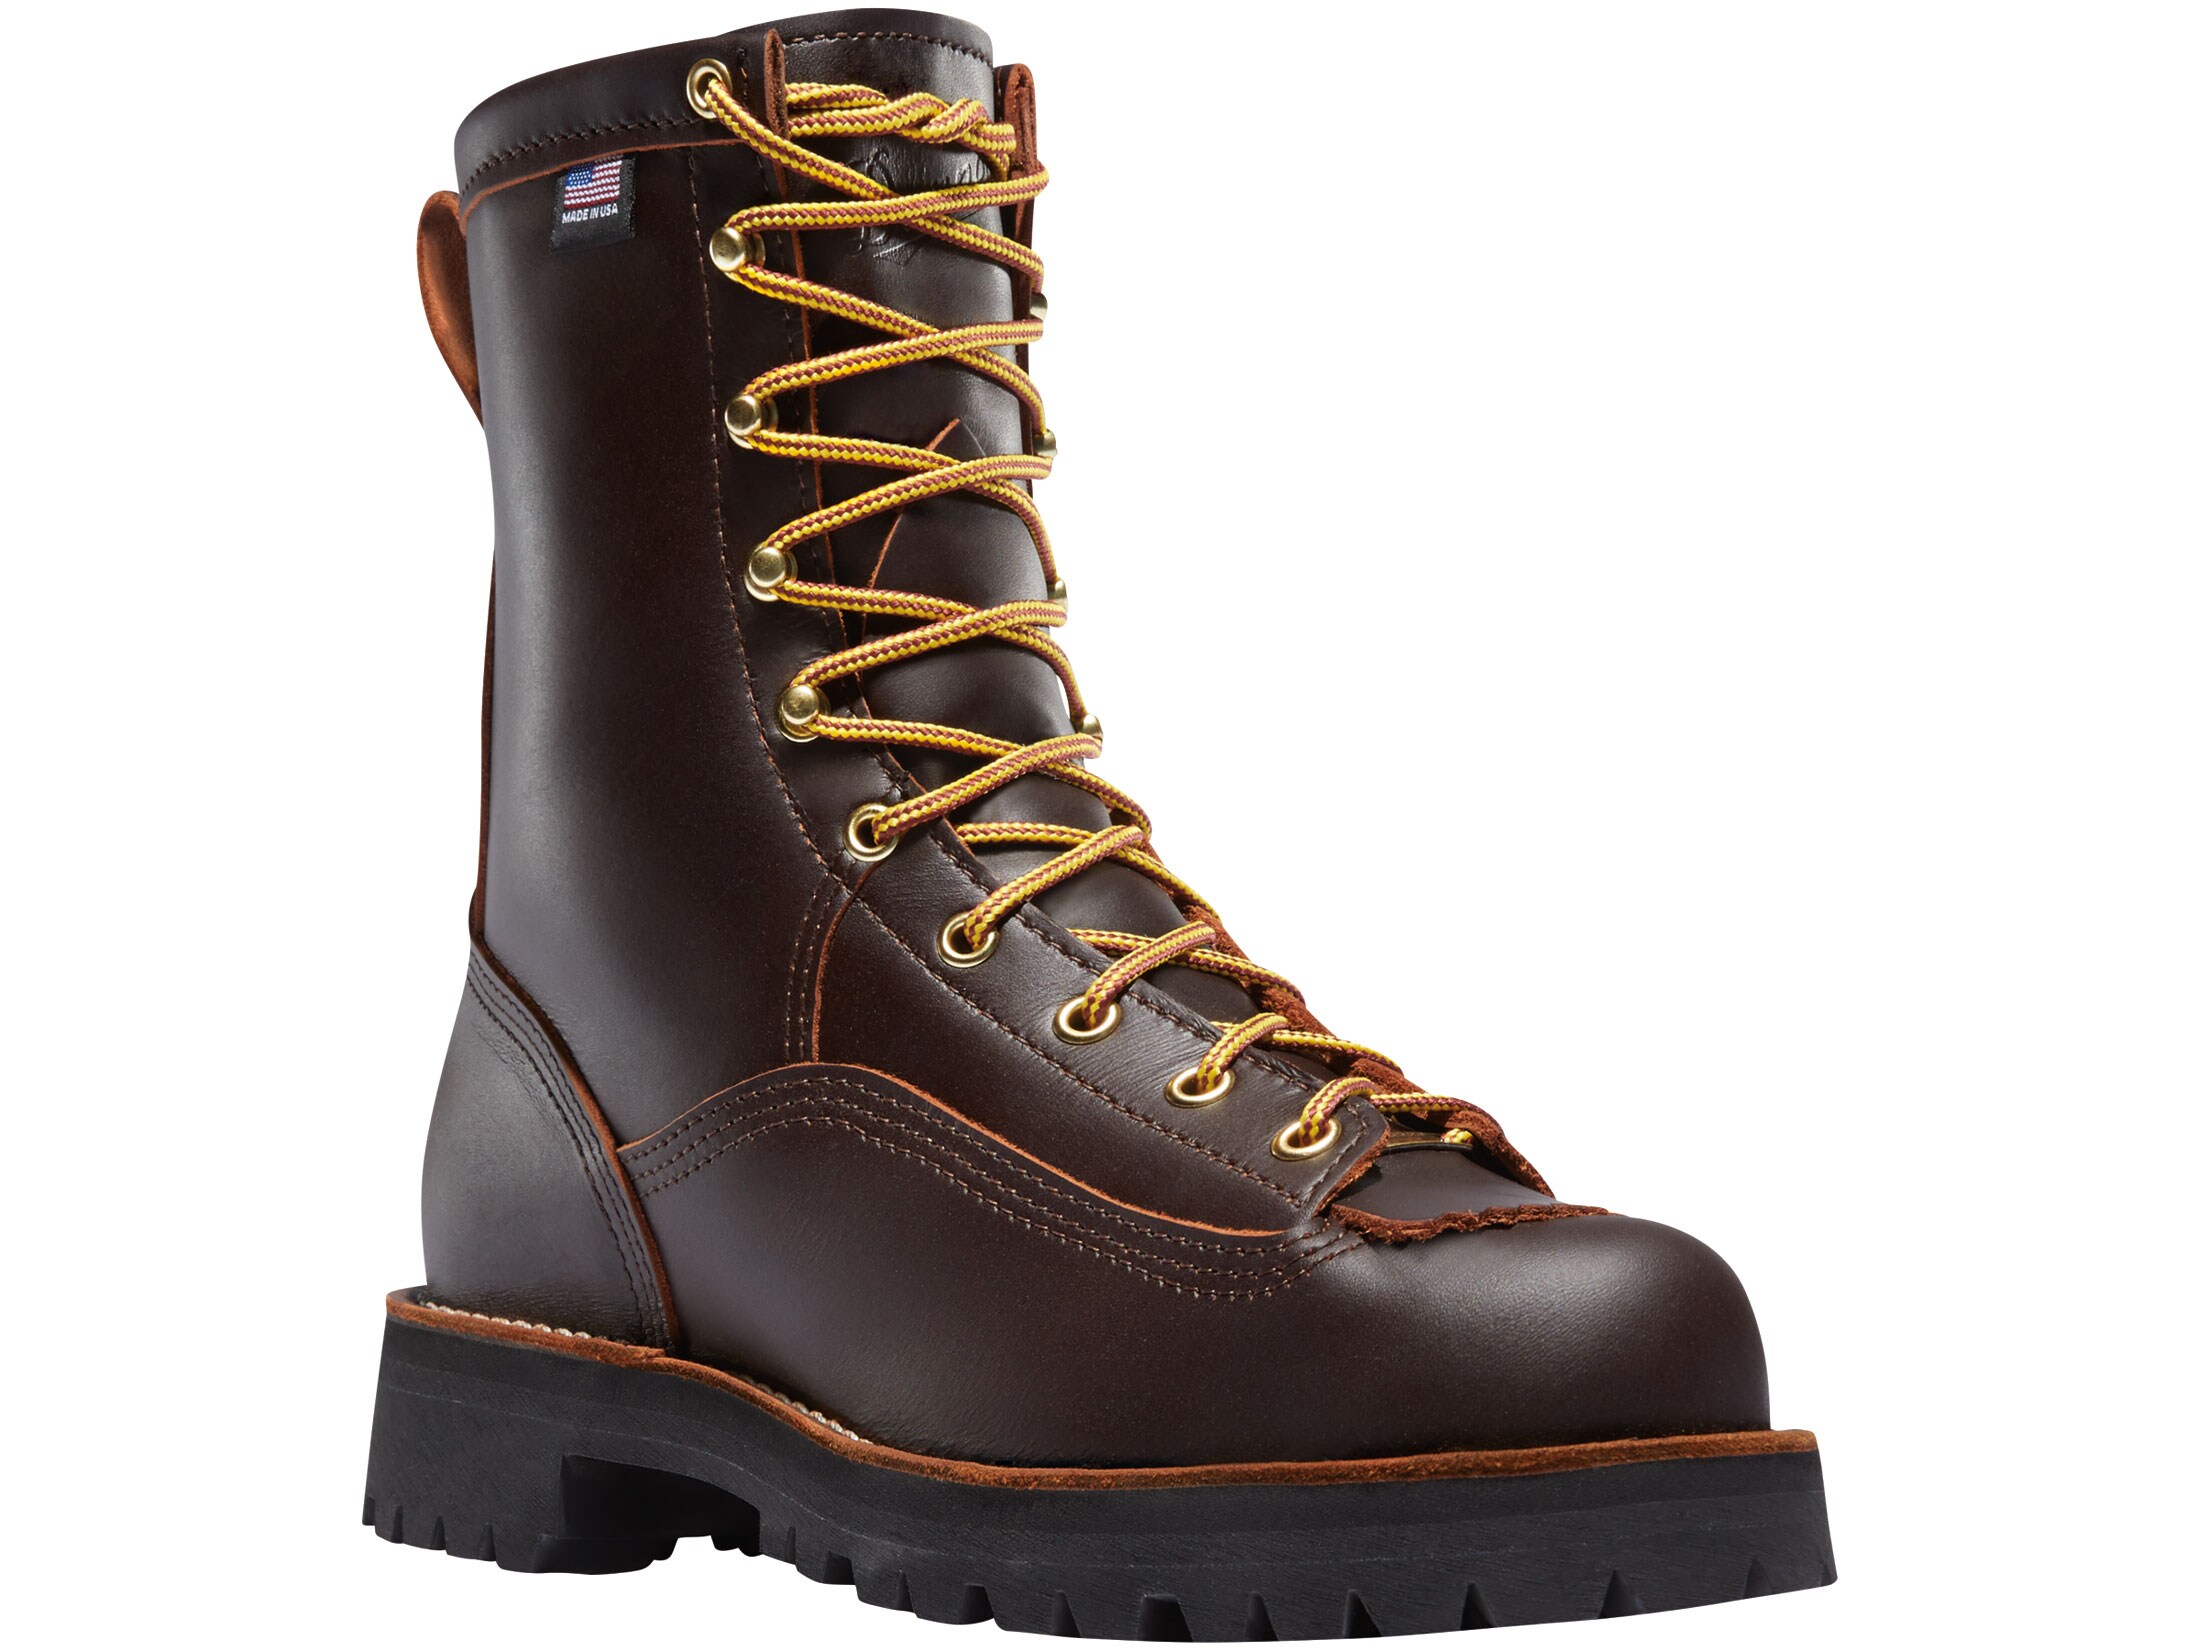 Danner Rain Forest 8 GTX GORE-TEX Work Boots Leather Brown Men's 15 D